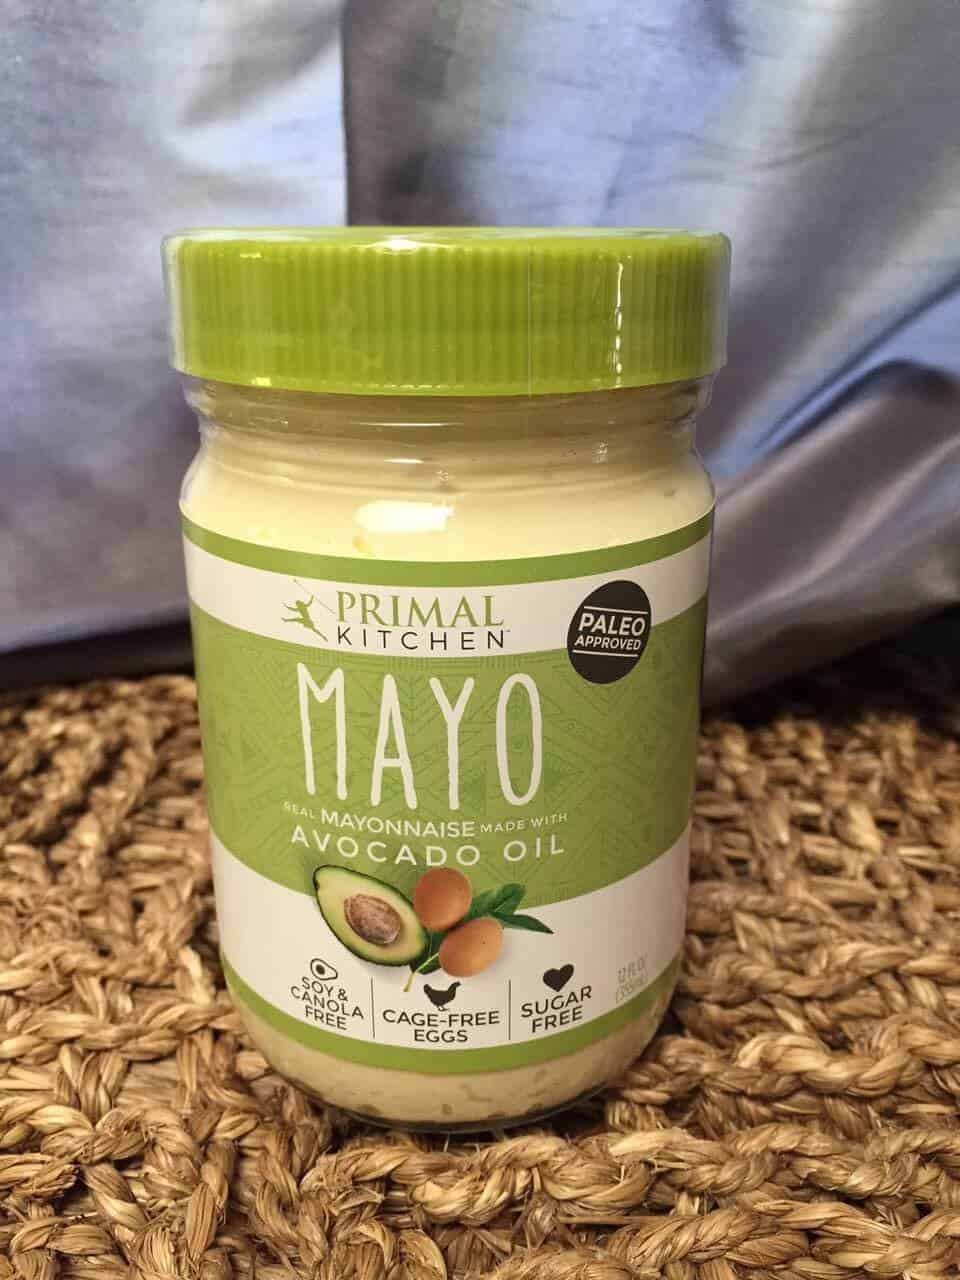 Primal Kitchen Mayo from Thrive Market